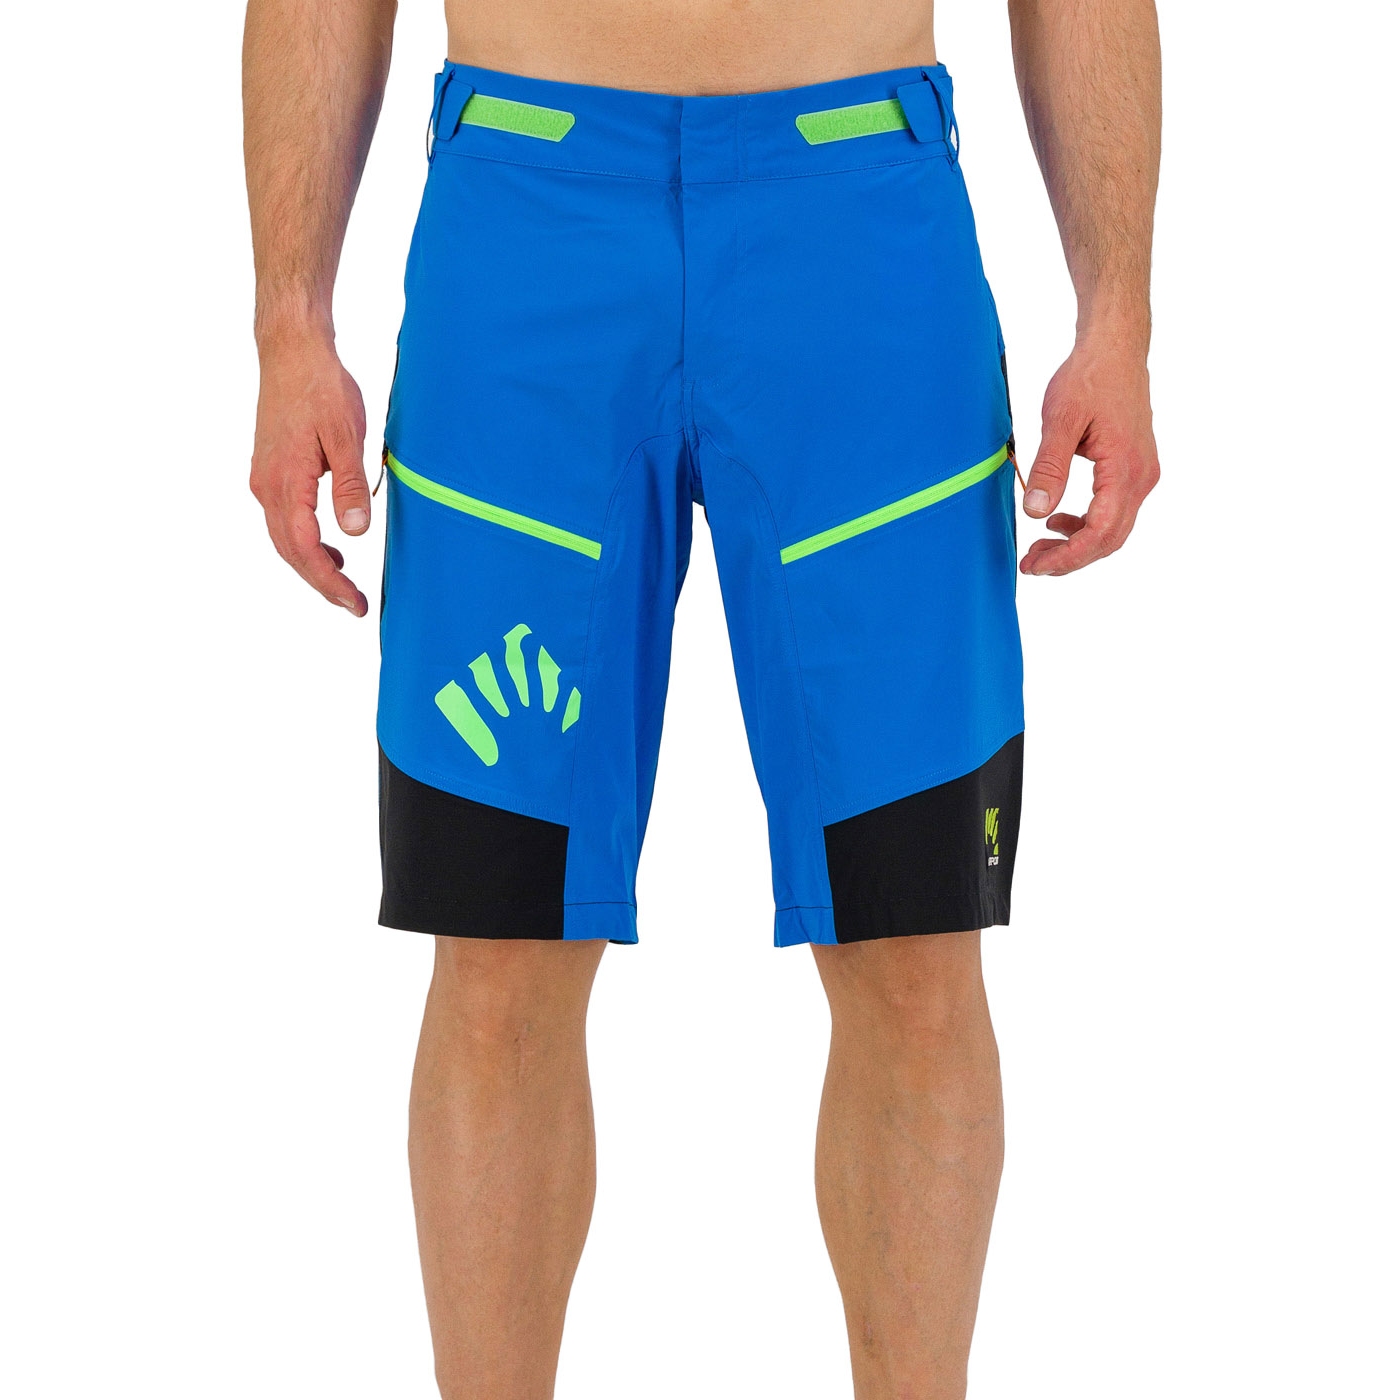 Productfoto van Karpos Rapid MTB Baggy-Shorts - indigo blue/black/green fluo